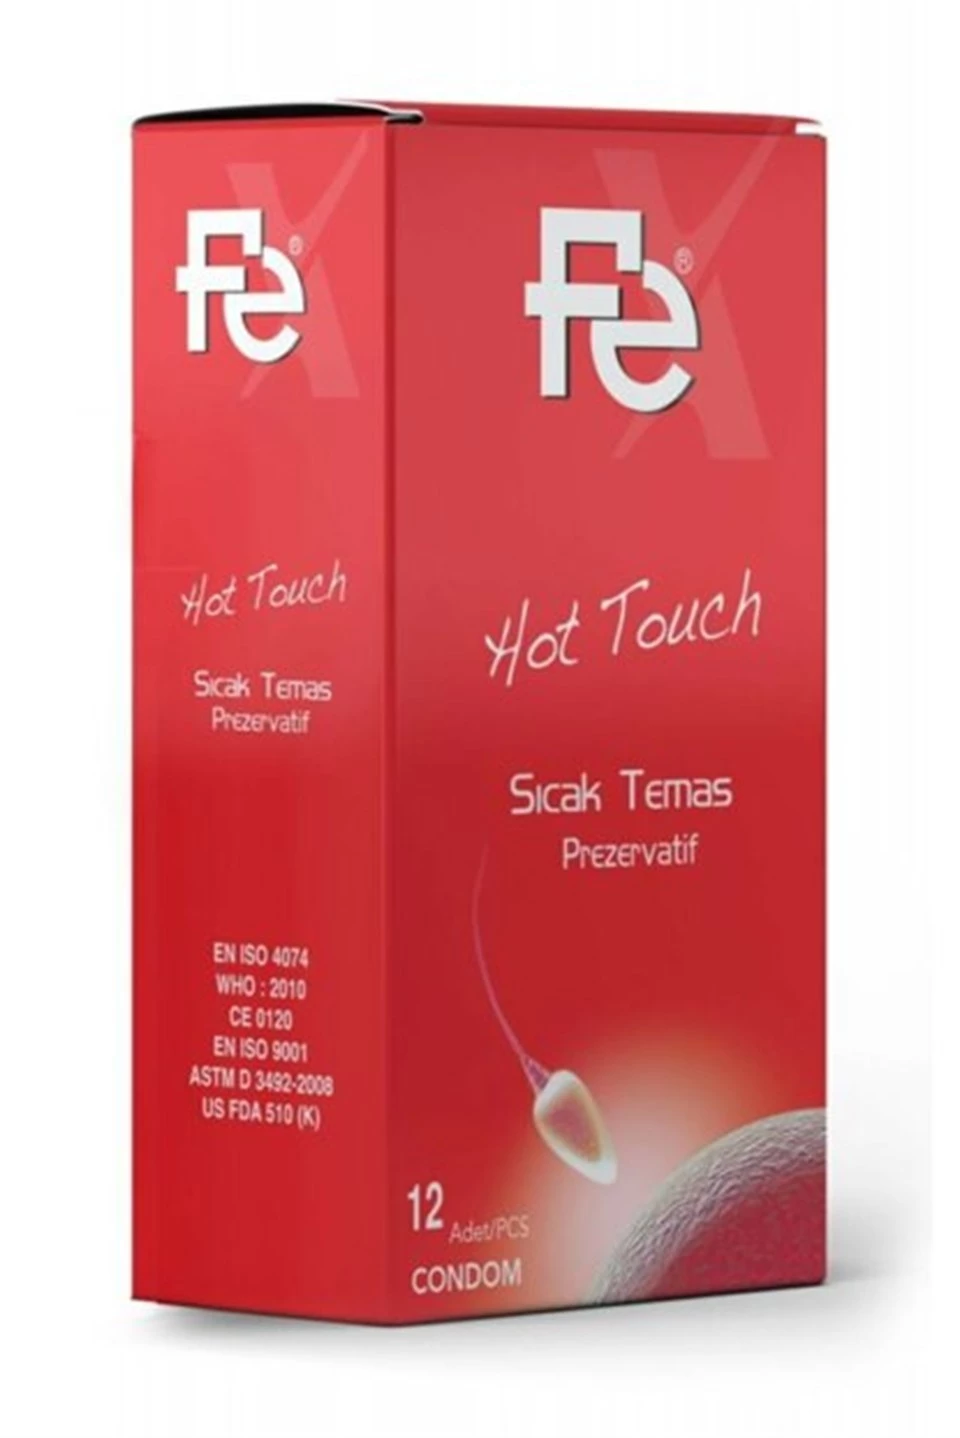 Fe Hot Touch Prezervatif 12li Kutu